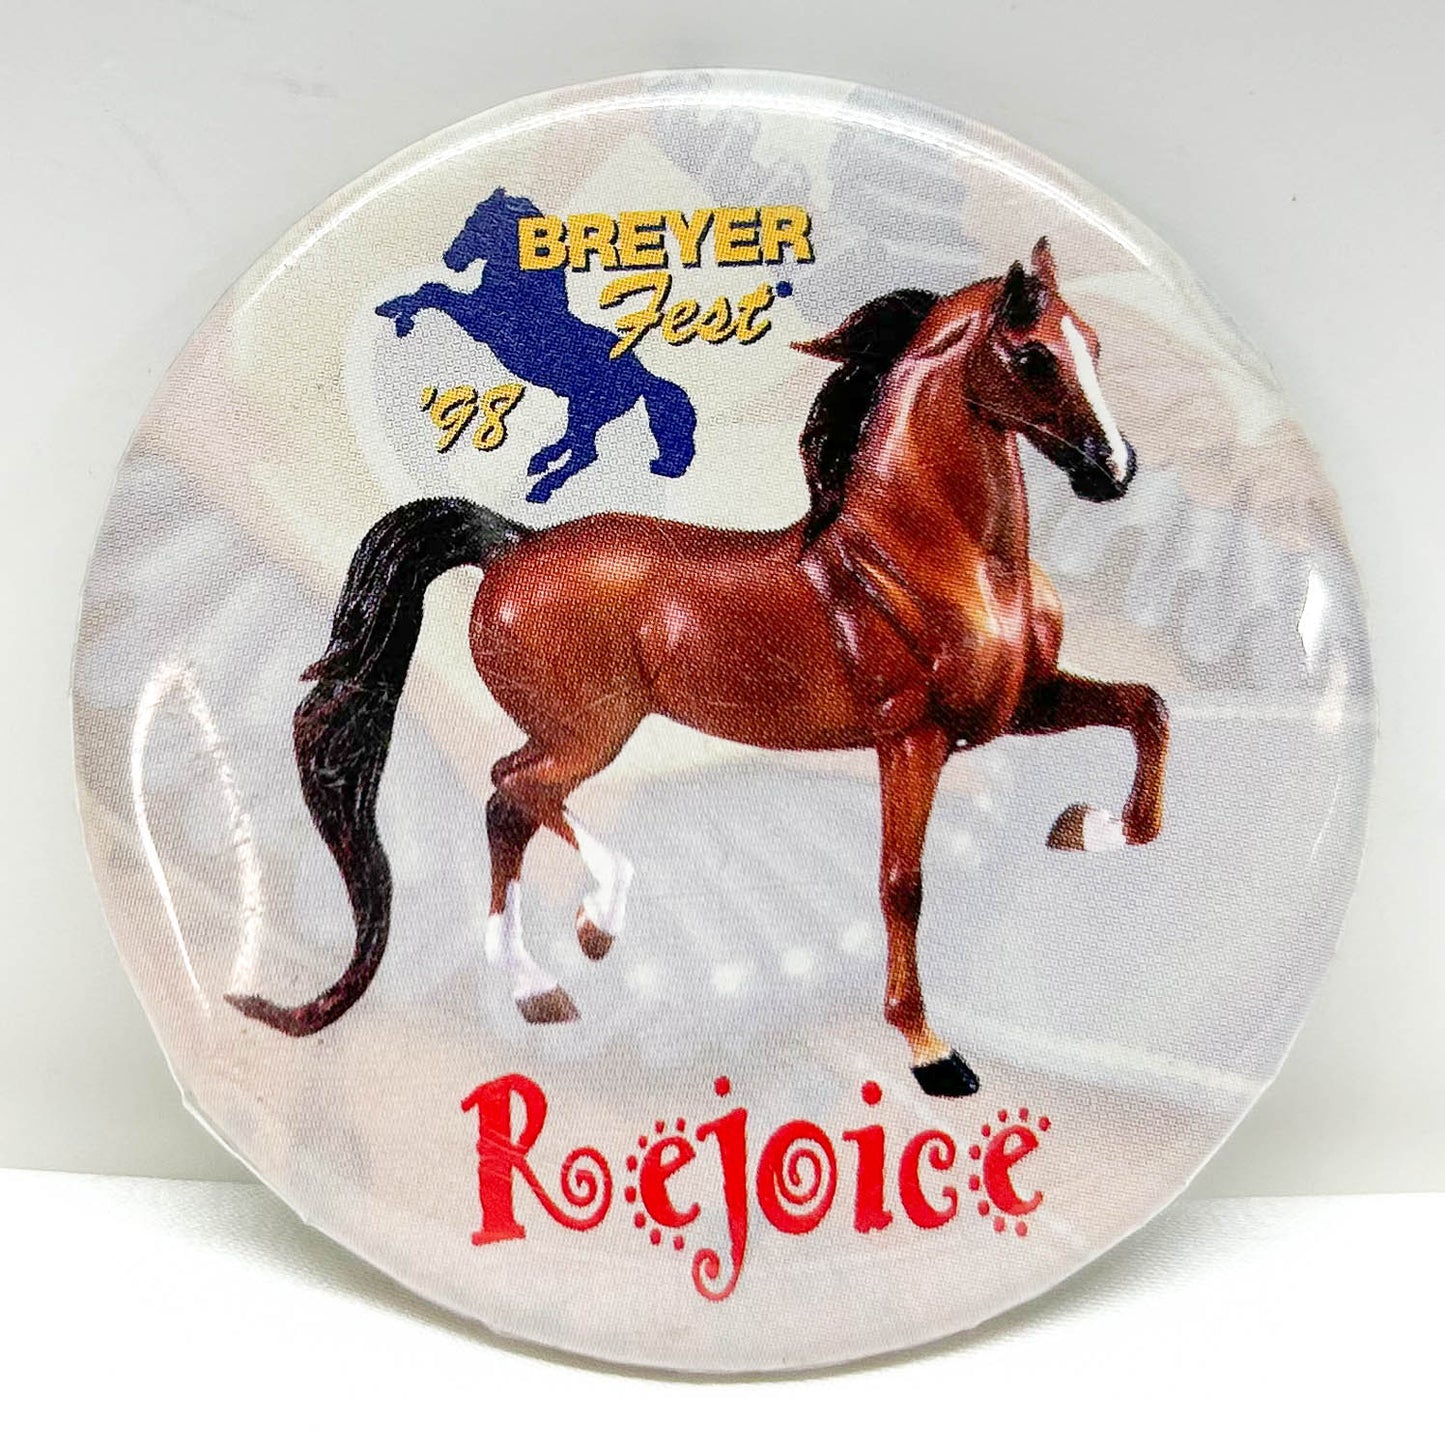 Button - Breyerfest 1998, Rejoice (sale for charity)